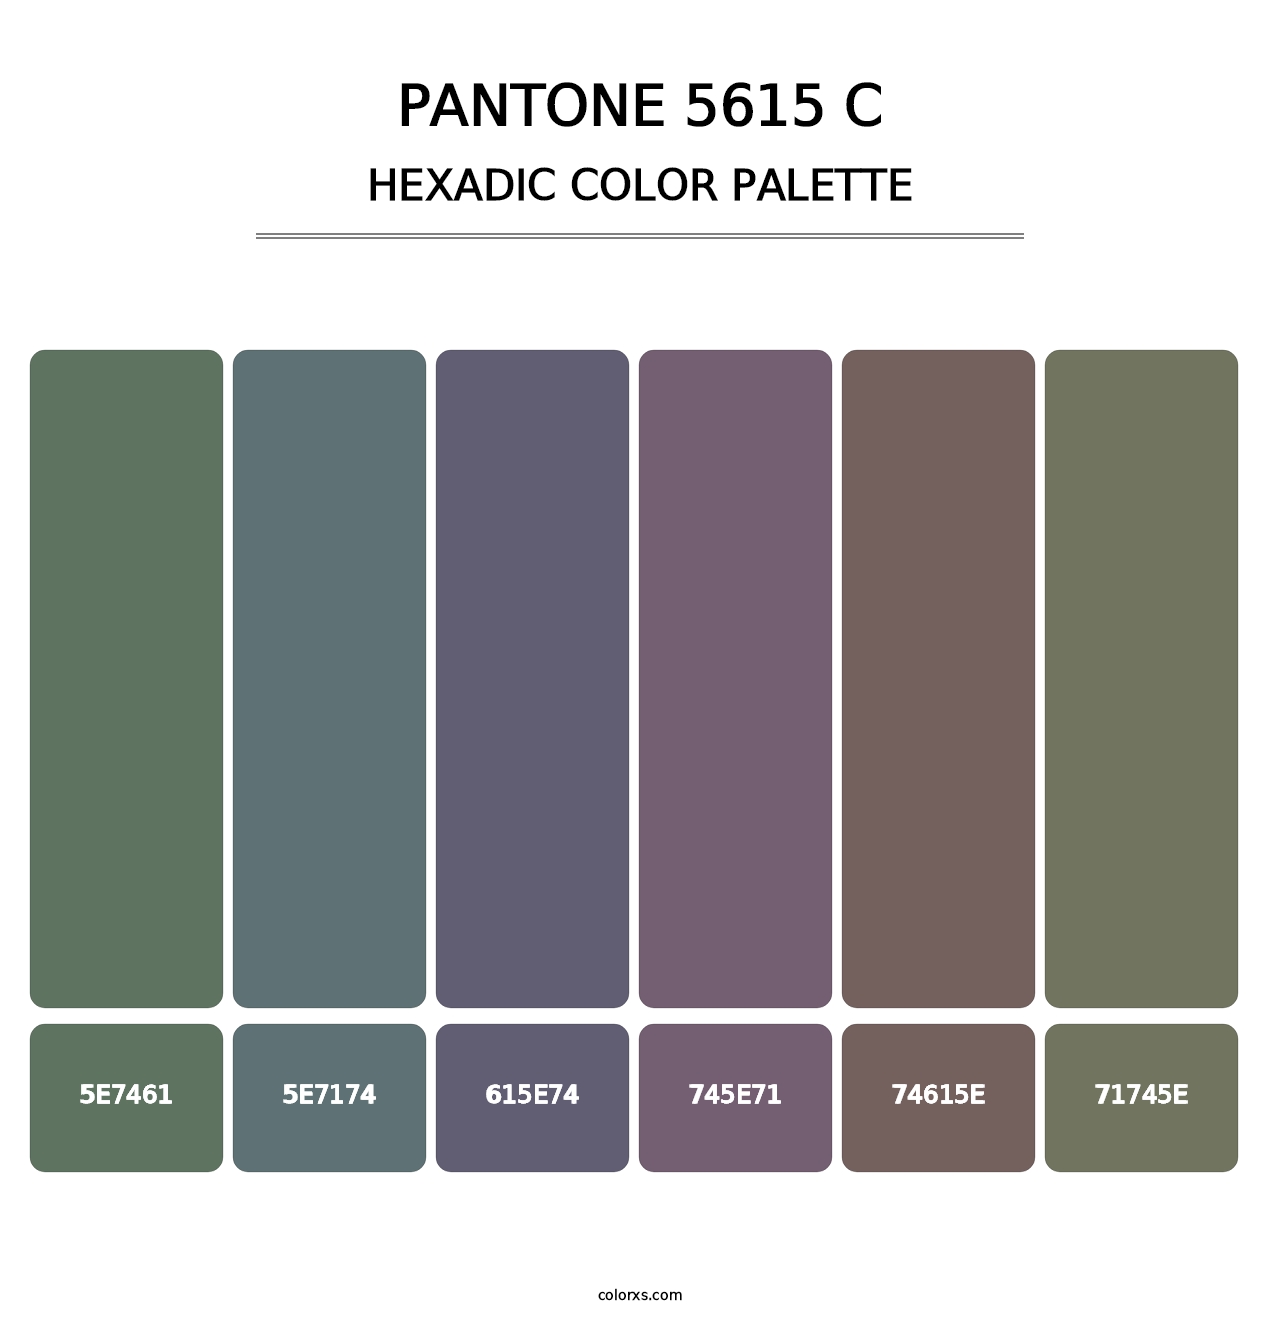 PANTONE 5615 C - Hexadic Color Palette